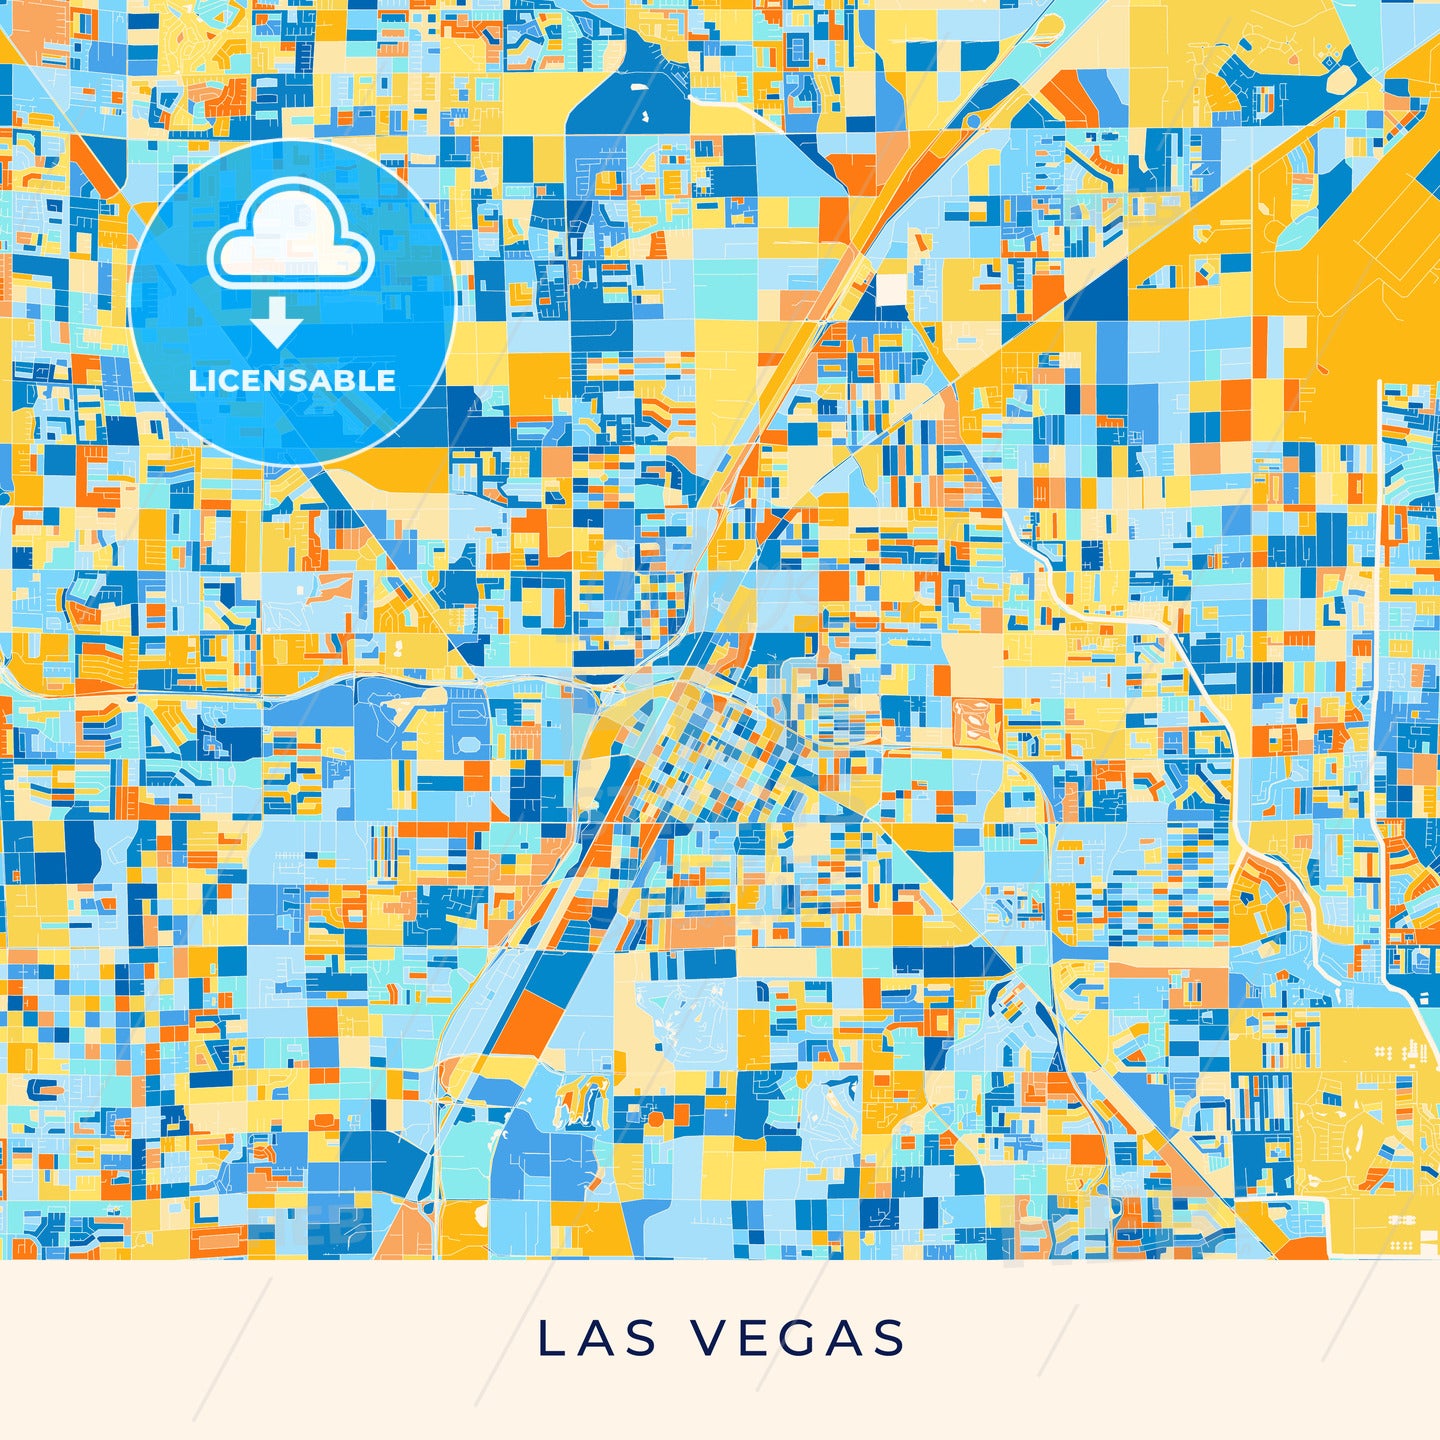 Las Vegas colorful map poster template